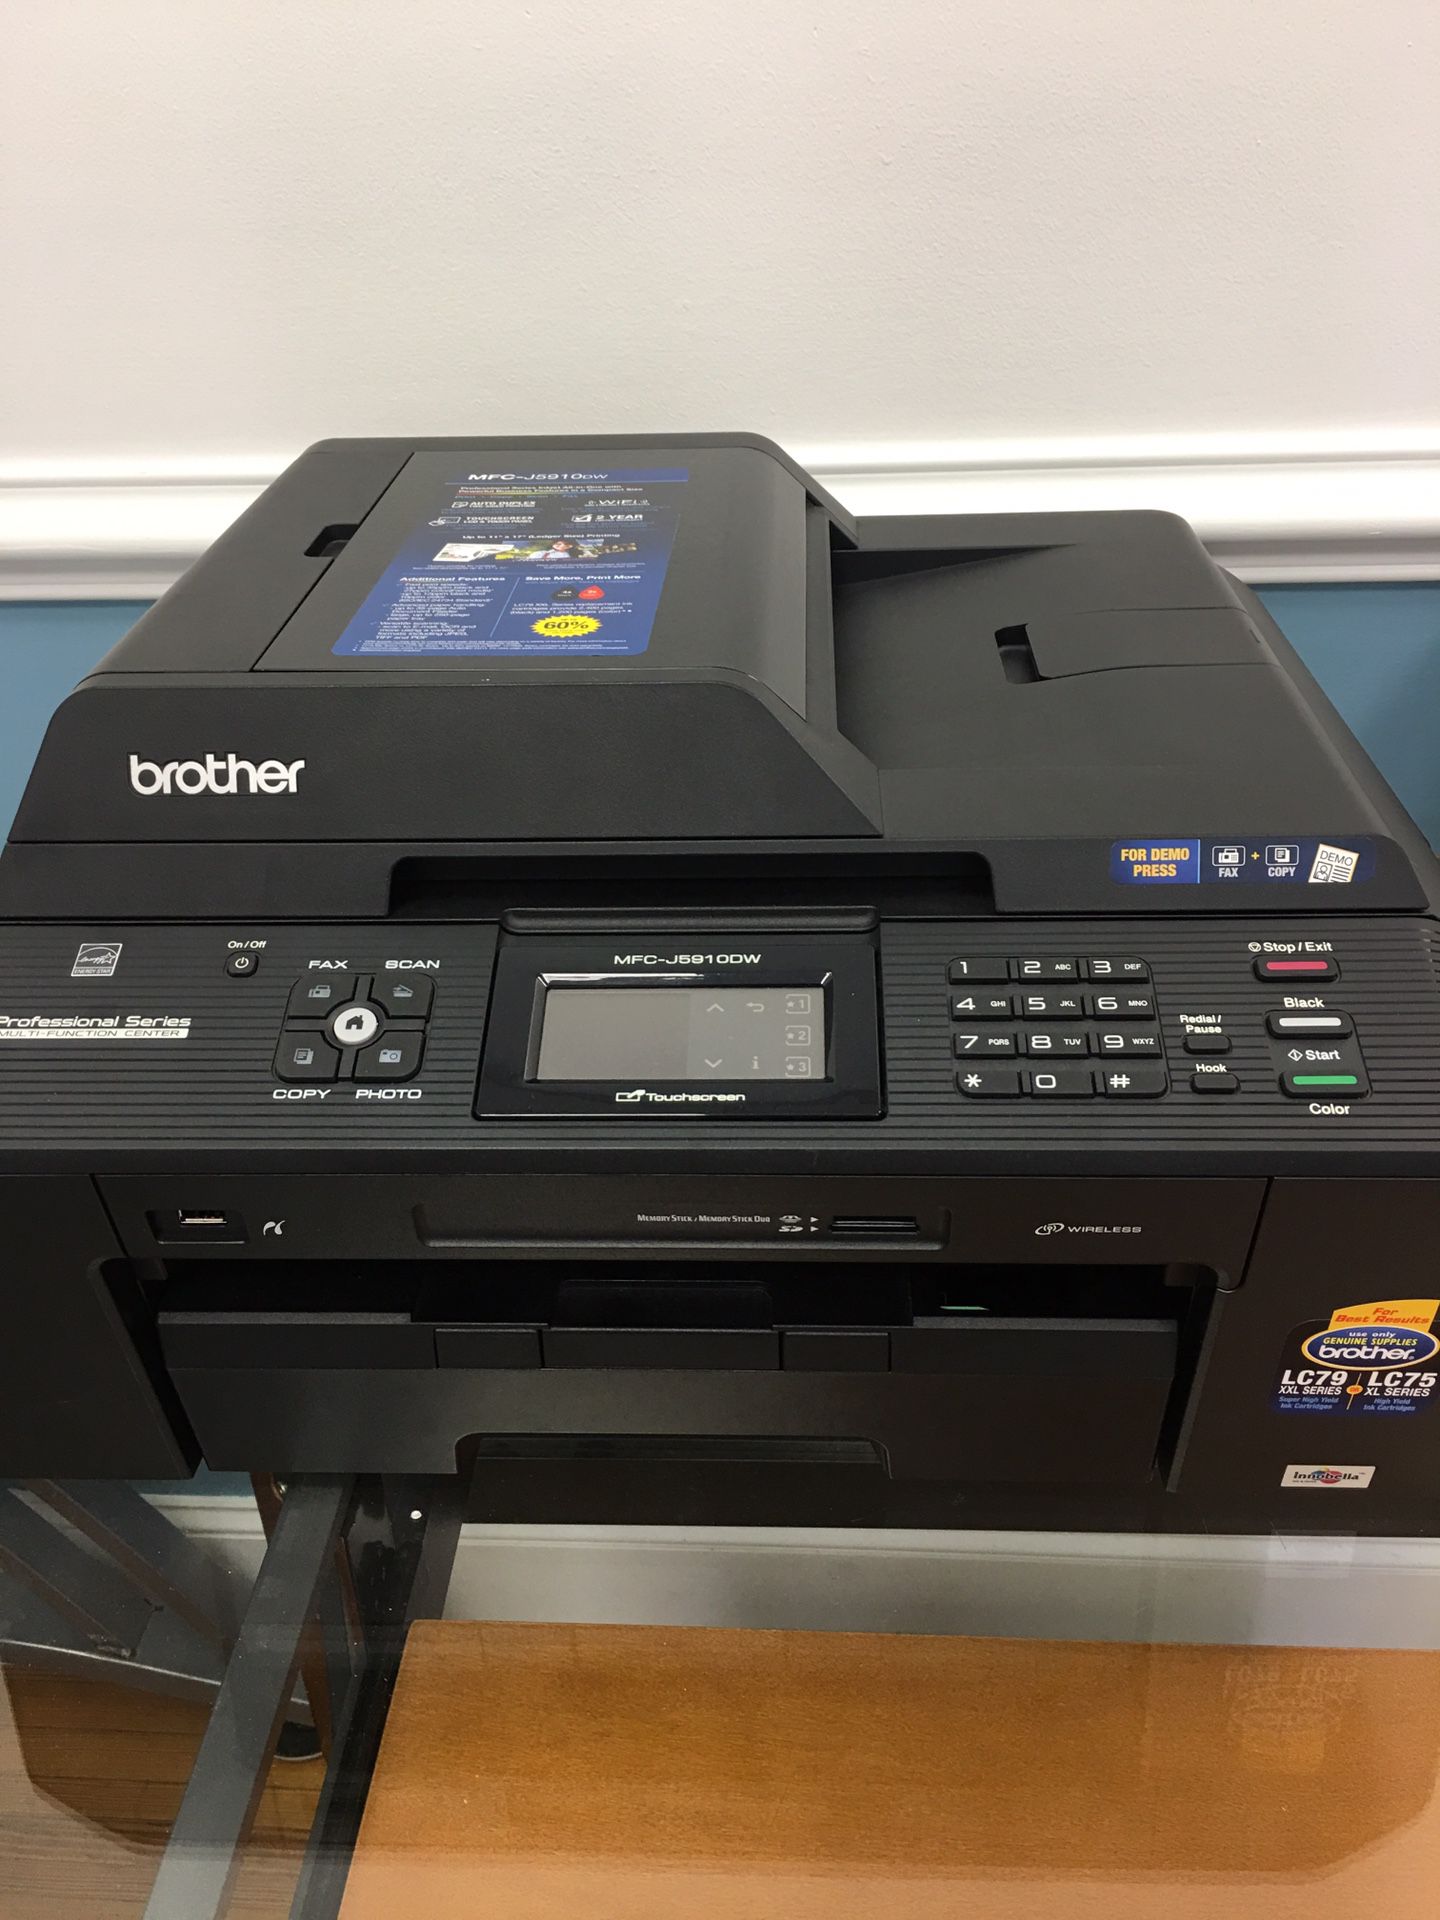 Printers - excellent condition